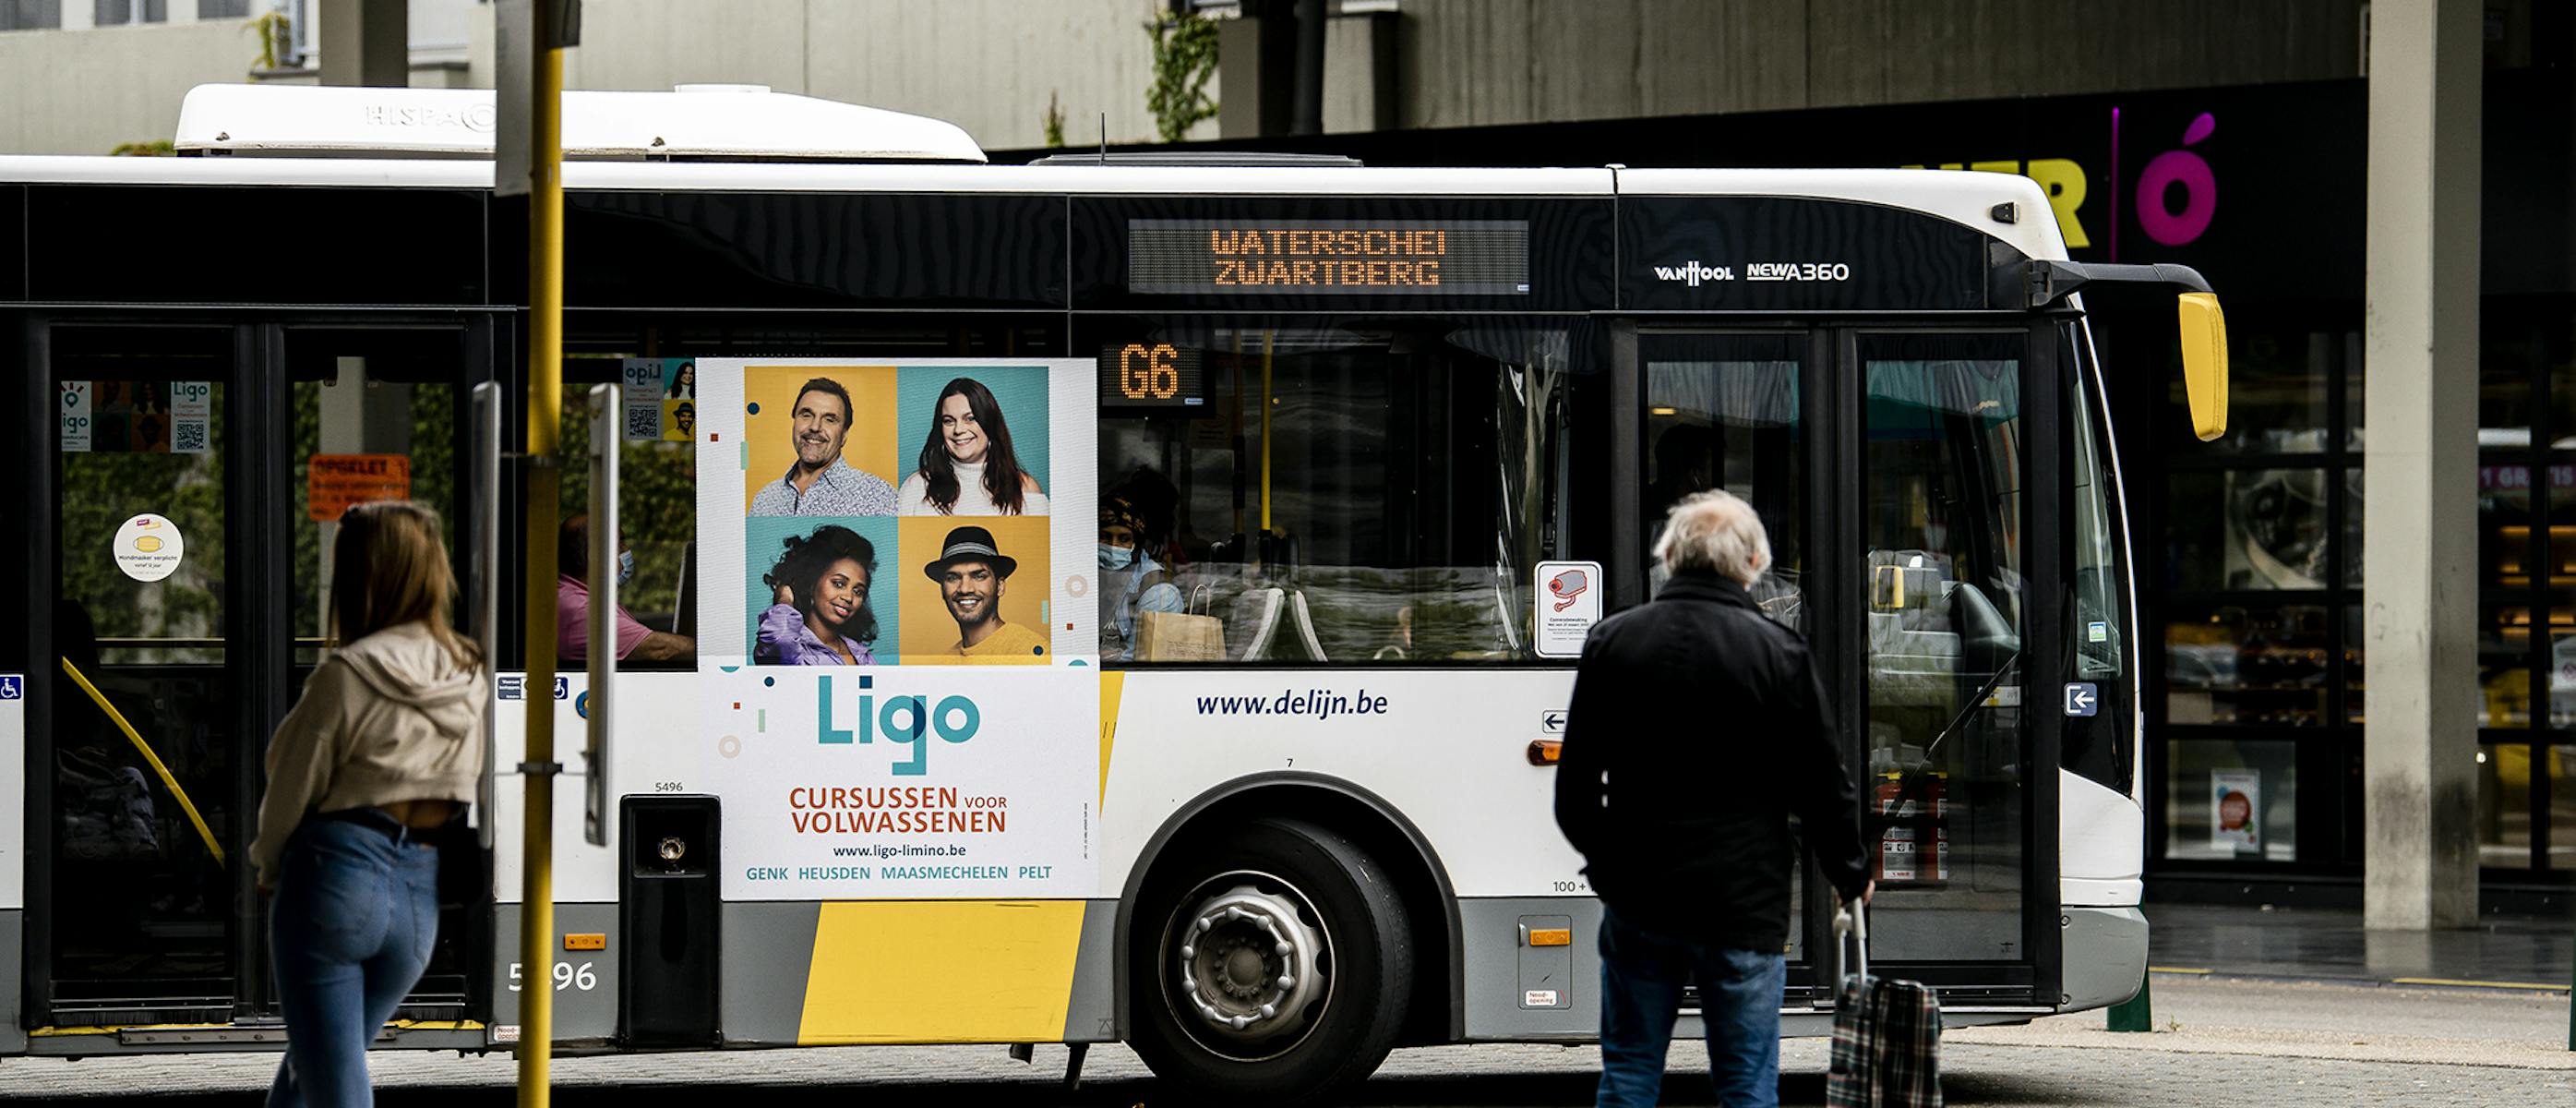 Bus - Window side 2m2 - Ligo